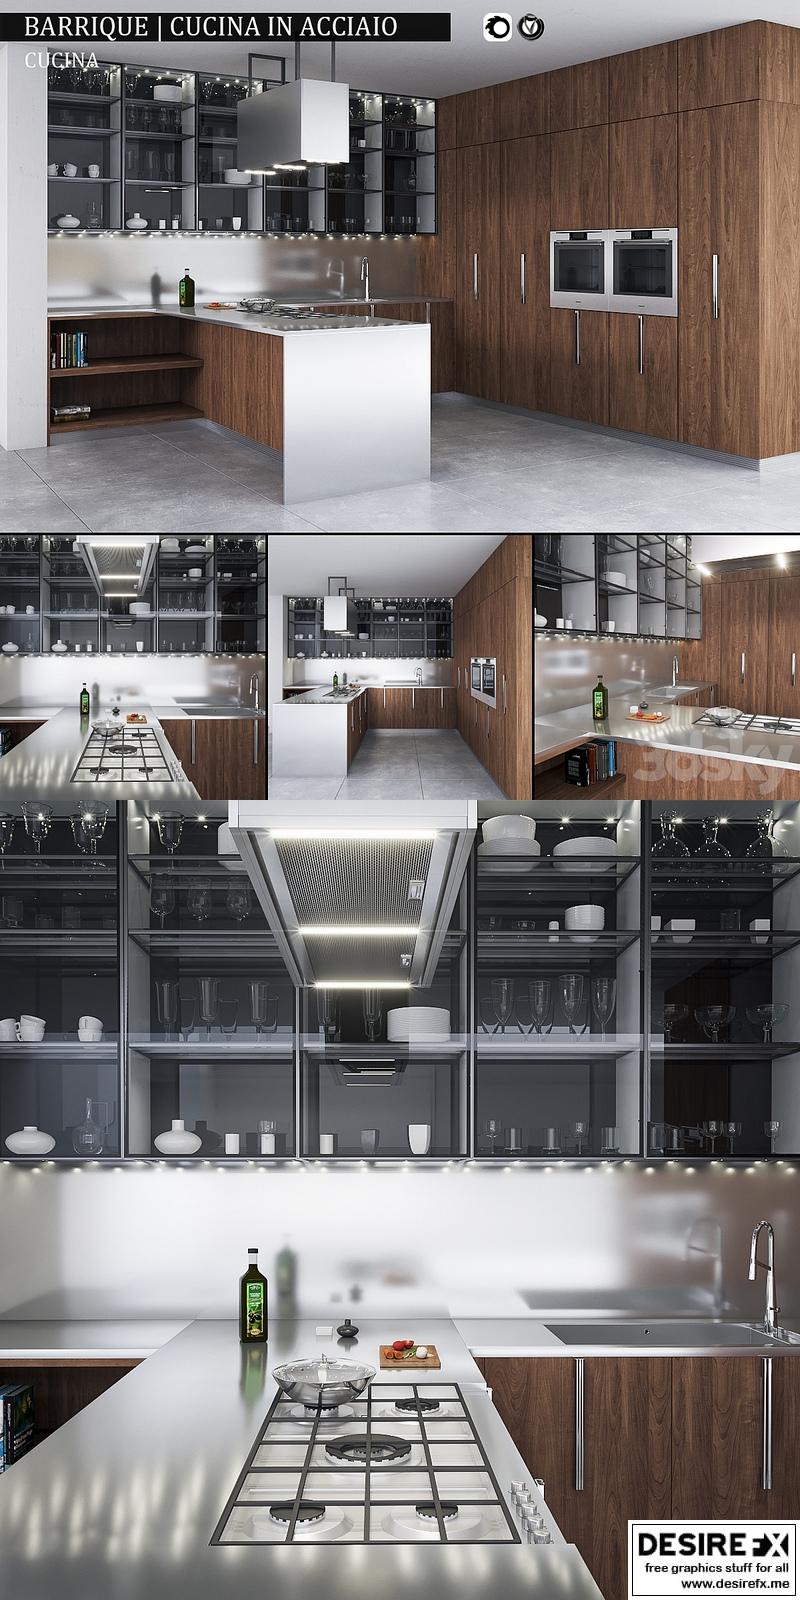 Desire FX 3d models | Kitchen Barrique Cucina in Acciaio – 3D Model